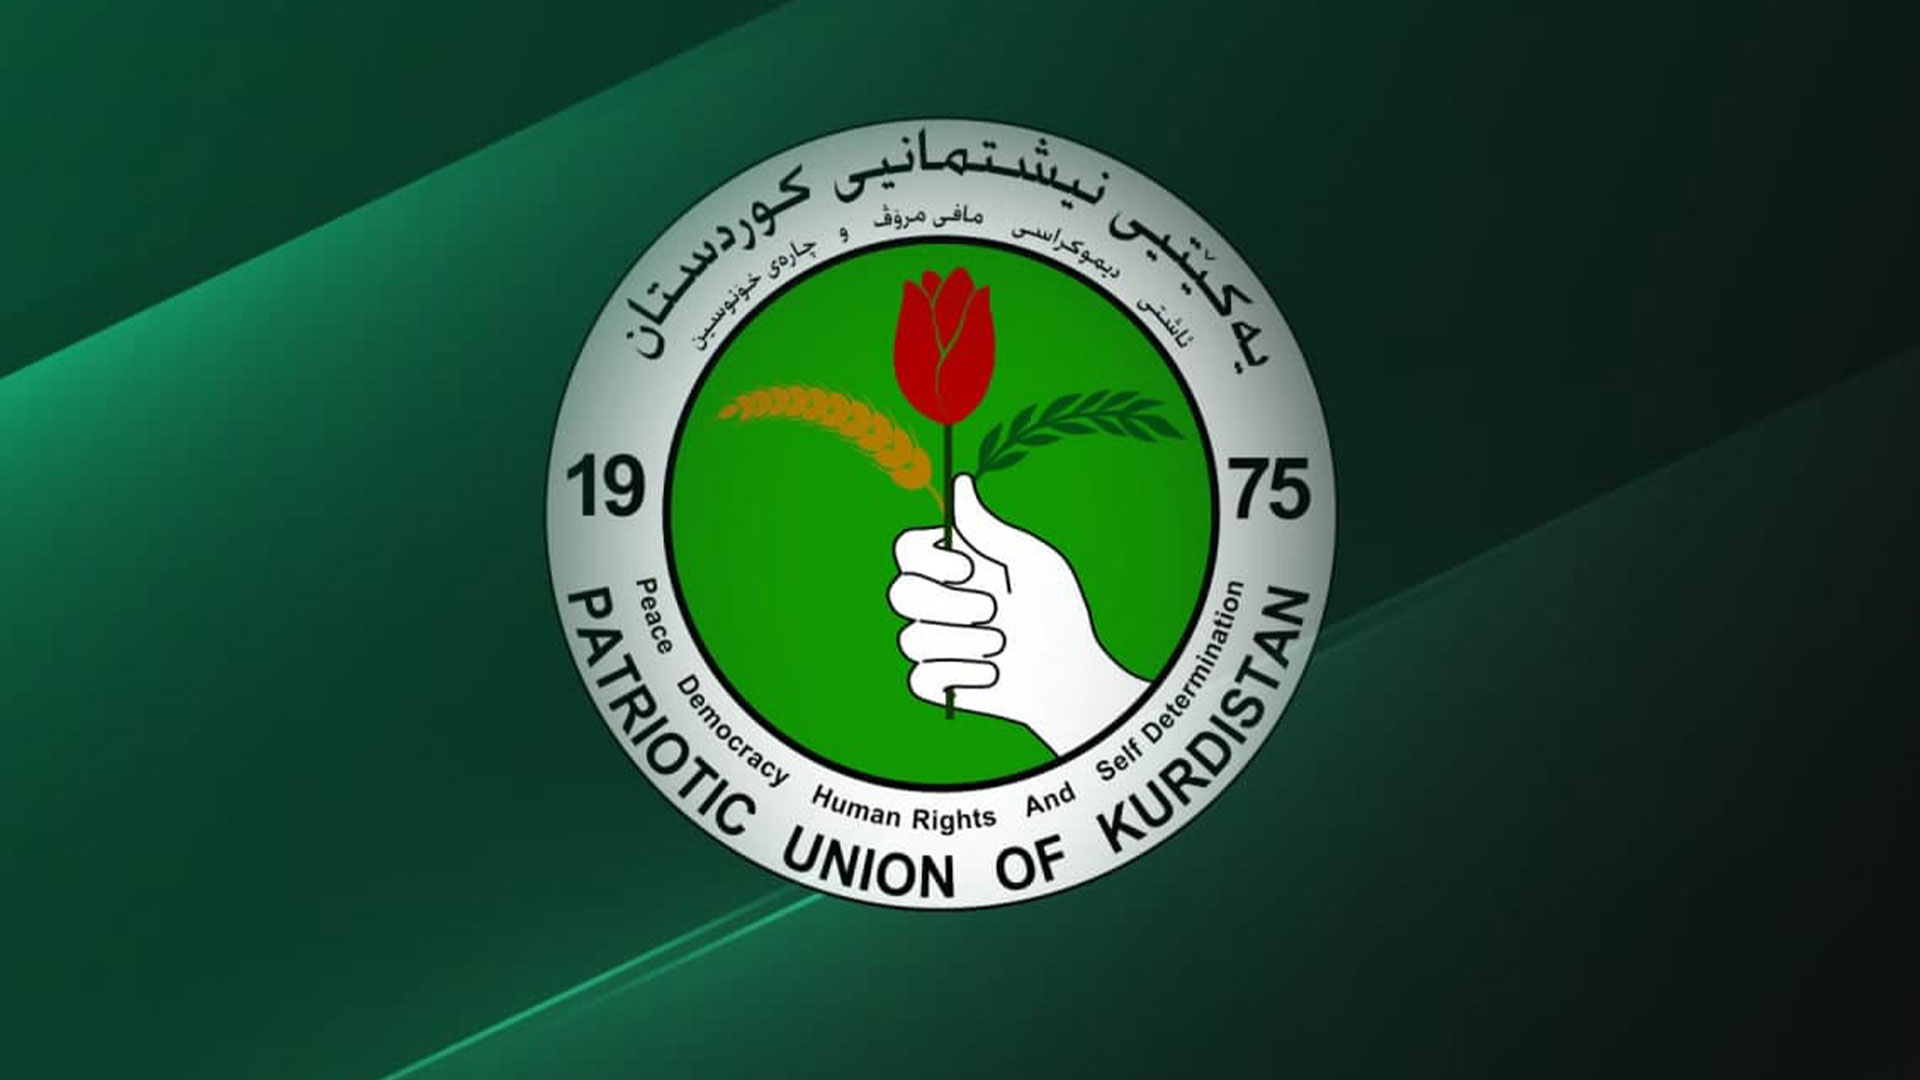  Patriotic Union of Kurdistan